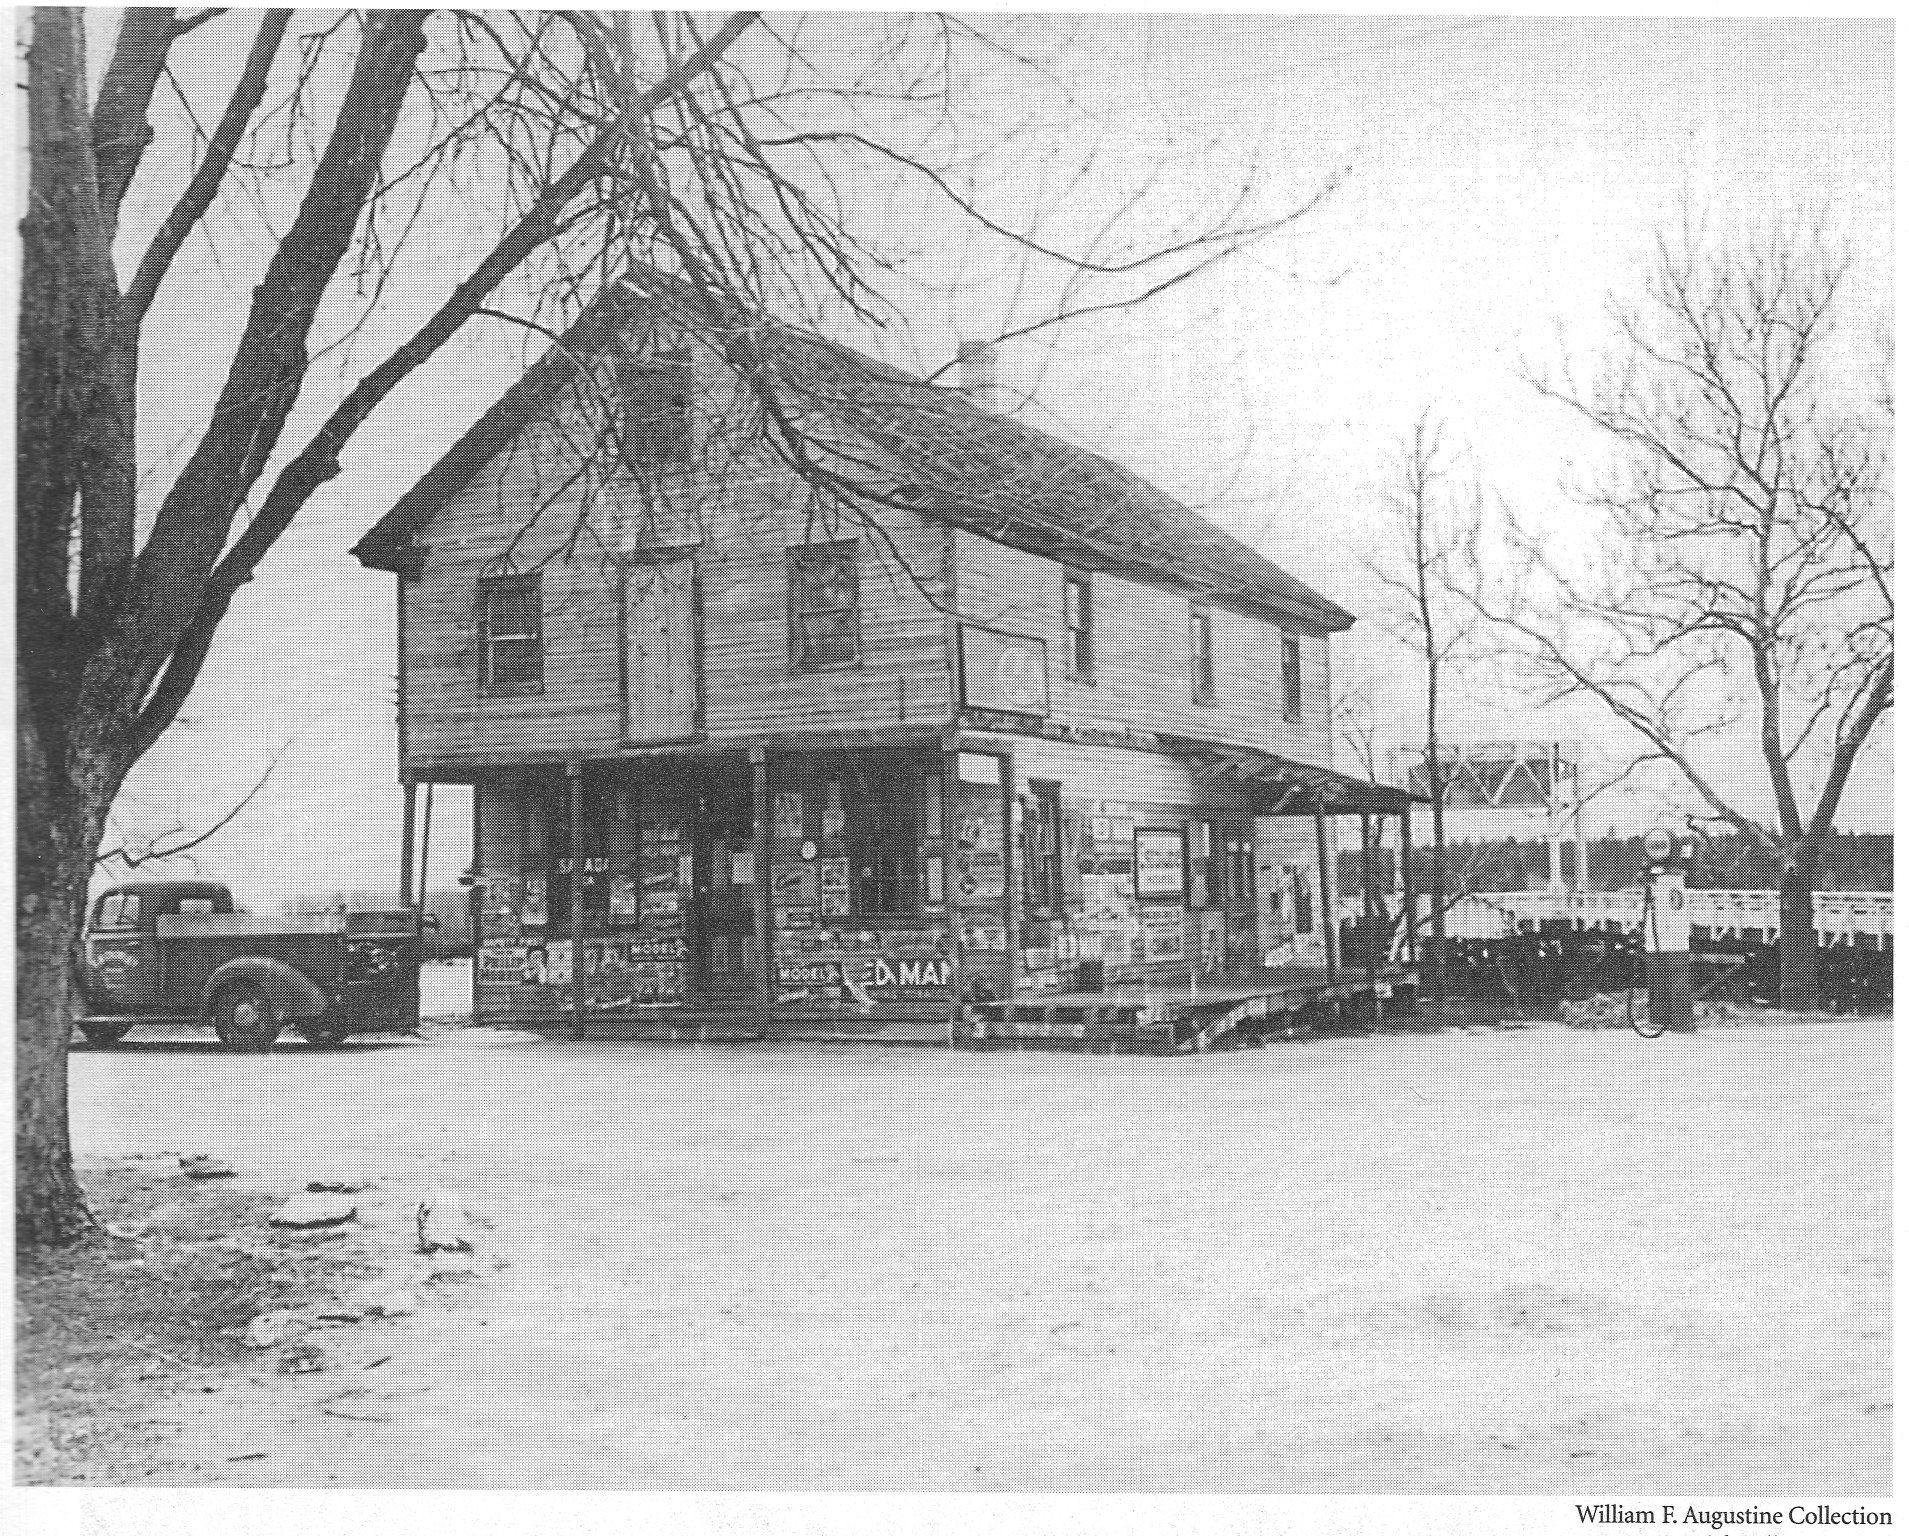 Green Bank - Burlington County - 1940 - Alan Rowles - b